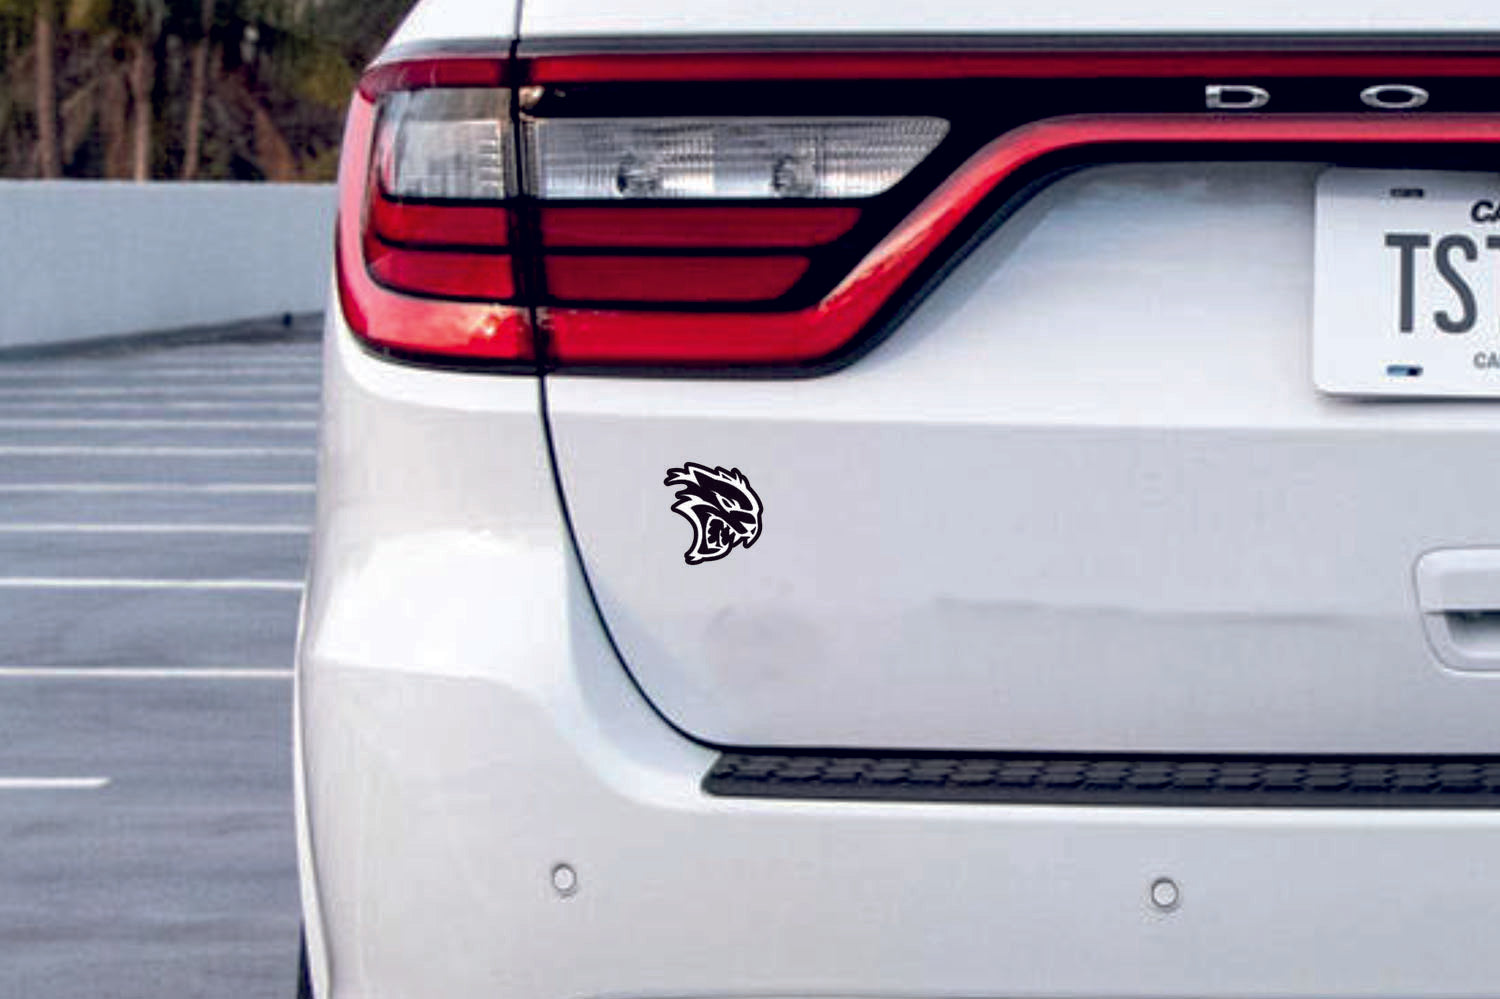 Chrysler tailgate trunk rear emblem with Hellcat logo (Type 2) - decoinfabric